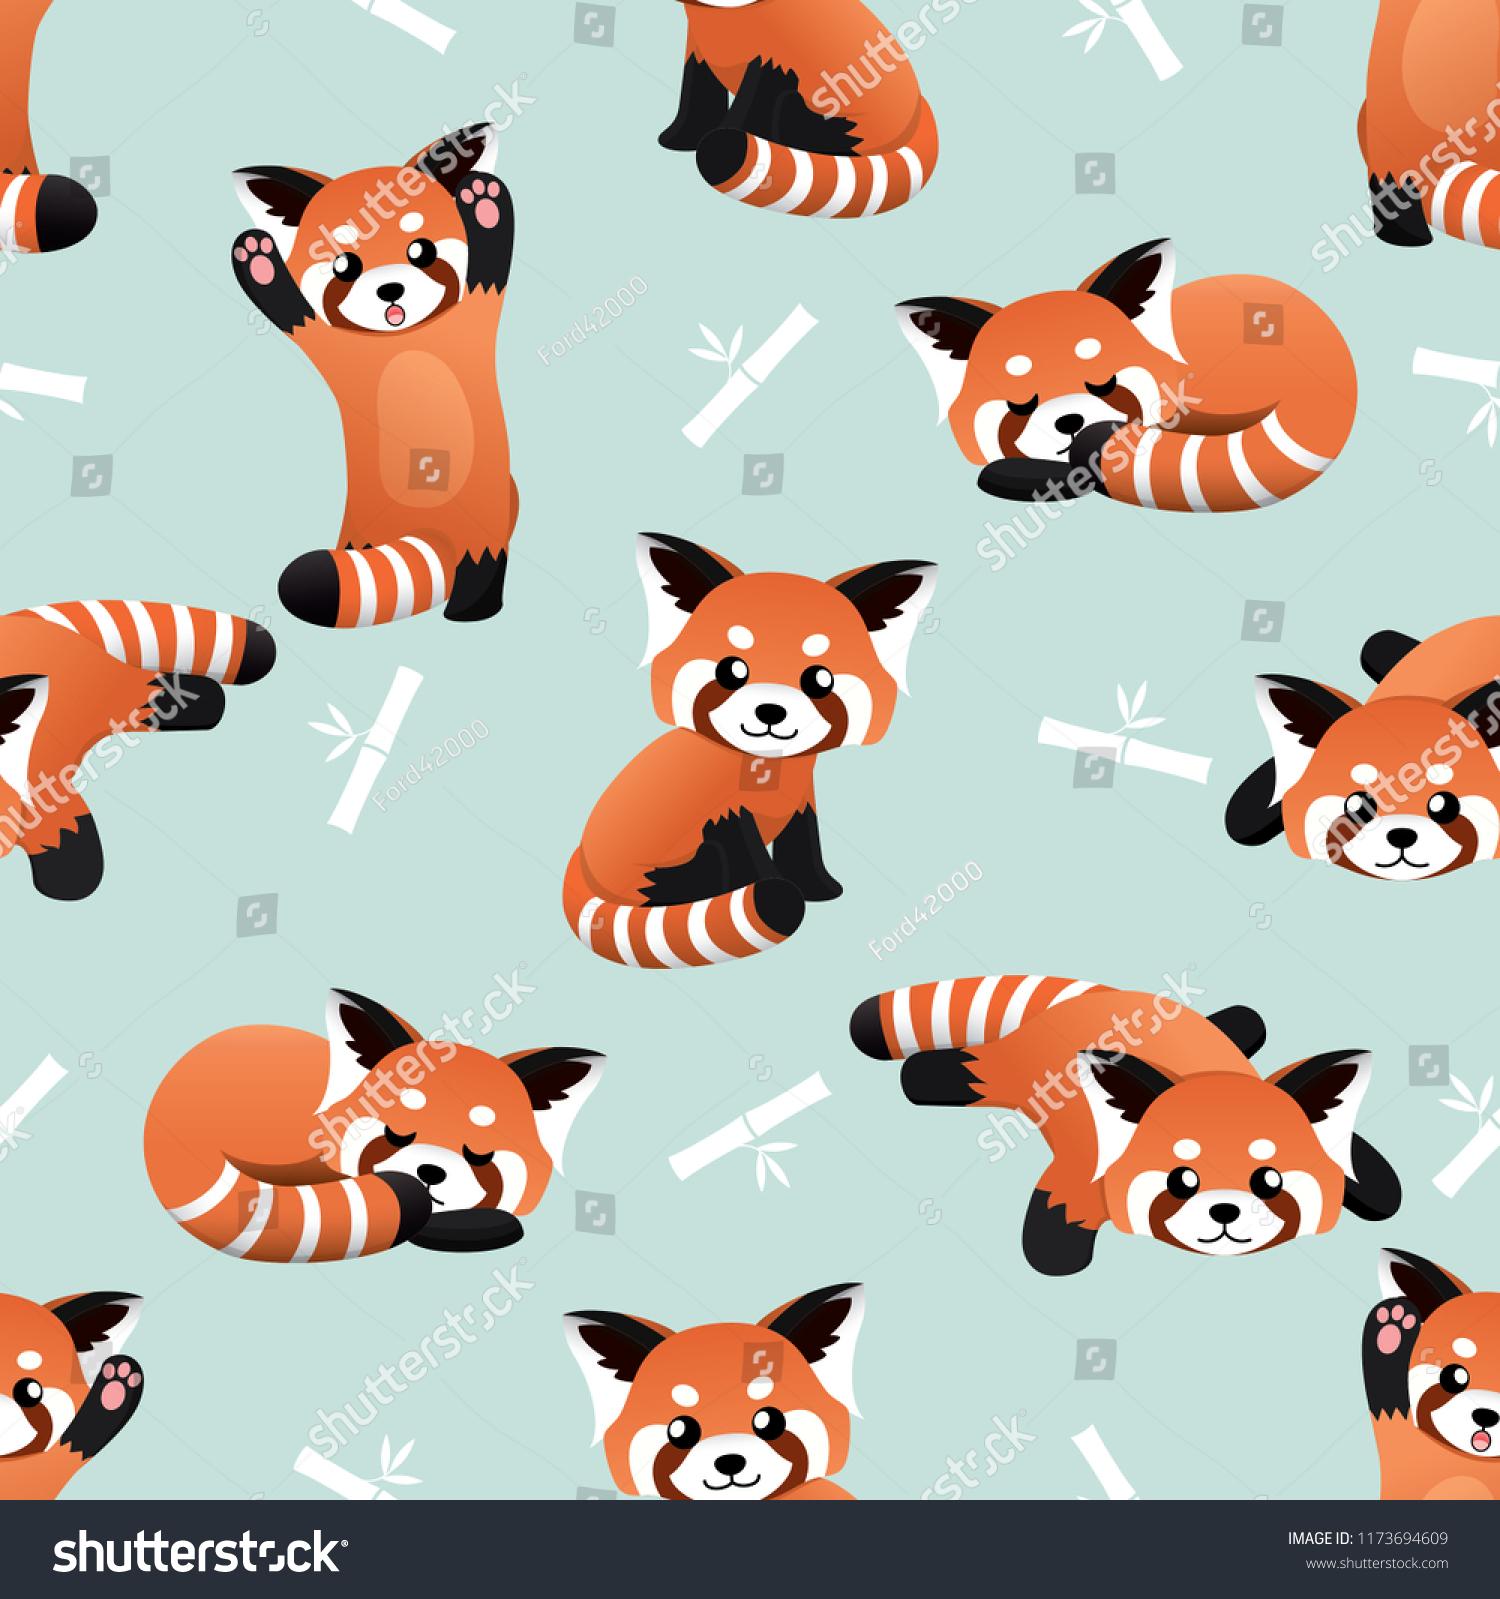 🔥 Free download Seamless Cute Red Panda Bamboo Vector Stock Vector ...